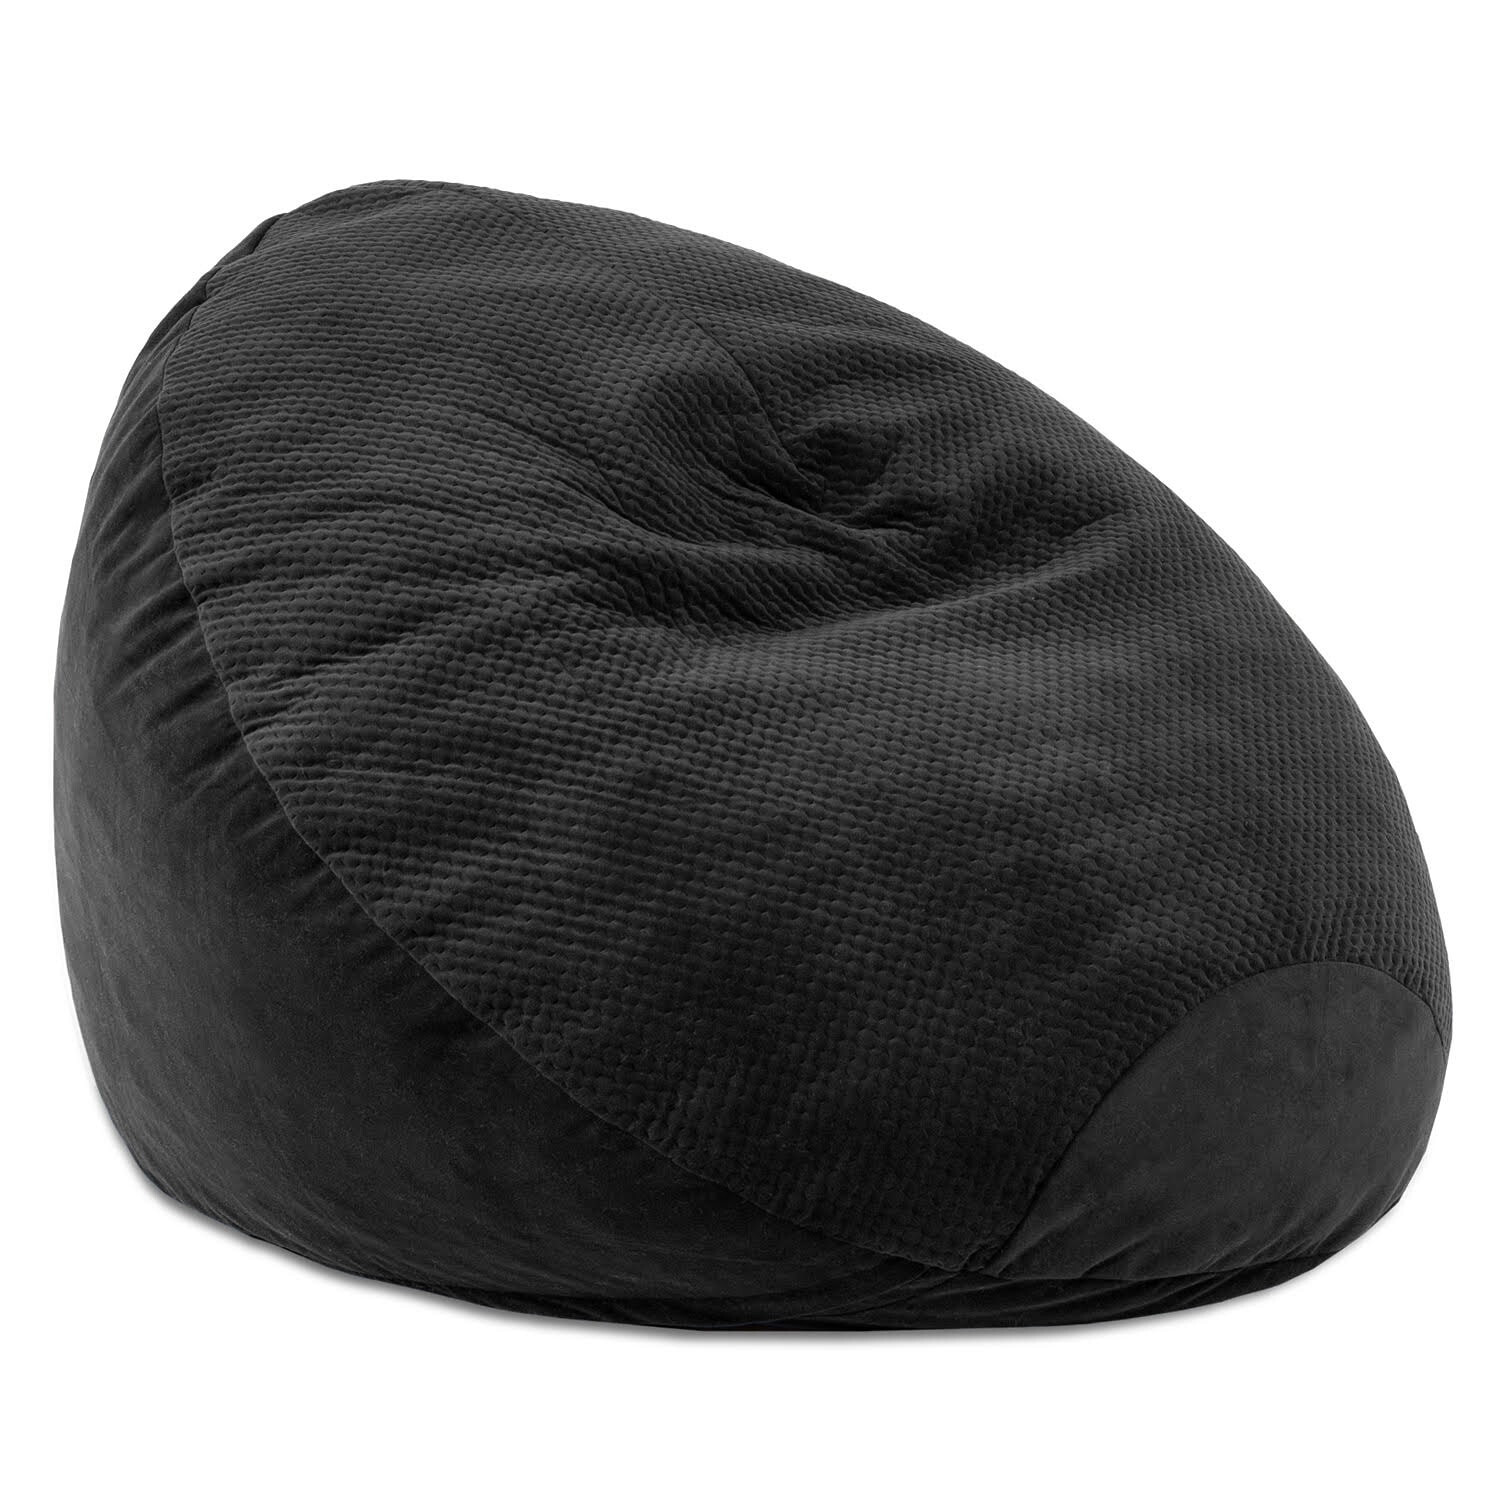 Koku Bean Bag (Black) - Jaxx Bean Bags & Foam Furniture - Touch of Modern